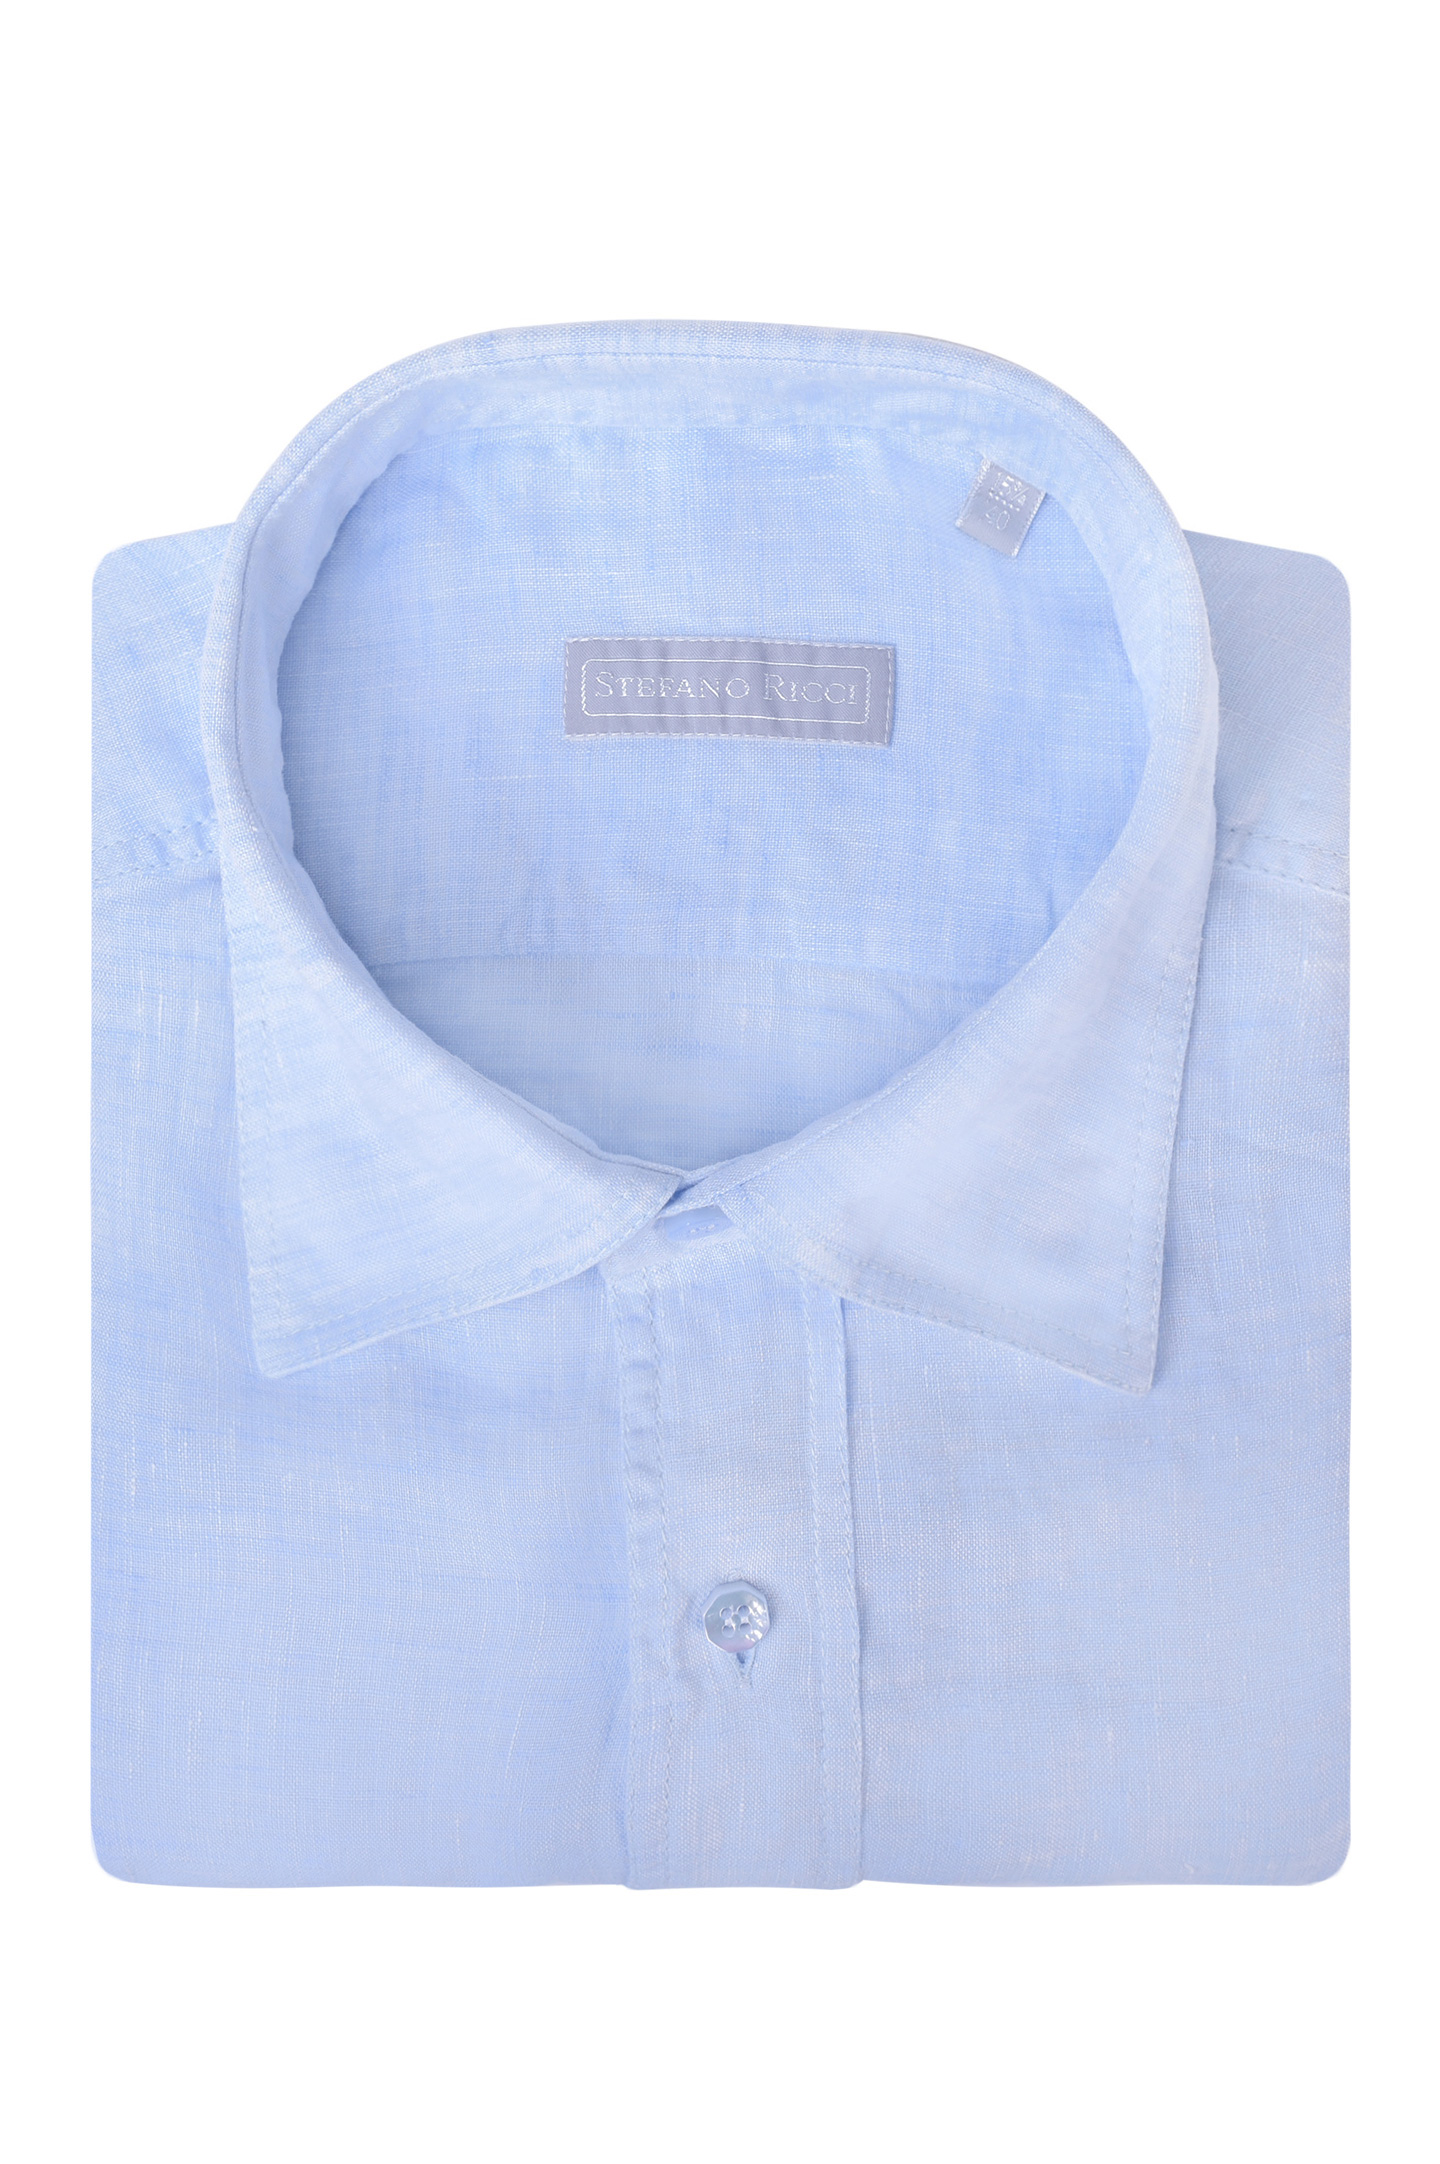 Рубашка STEFANO RICCI MC005949 L1950, цвет: Голубой, Мужской